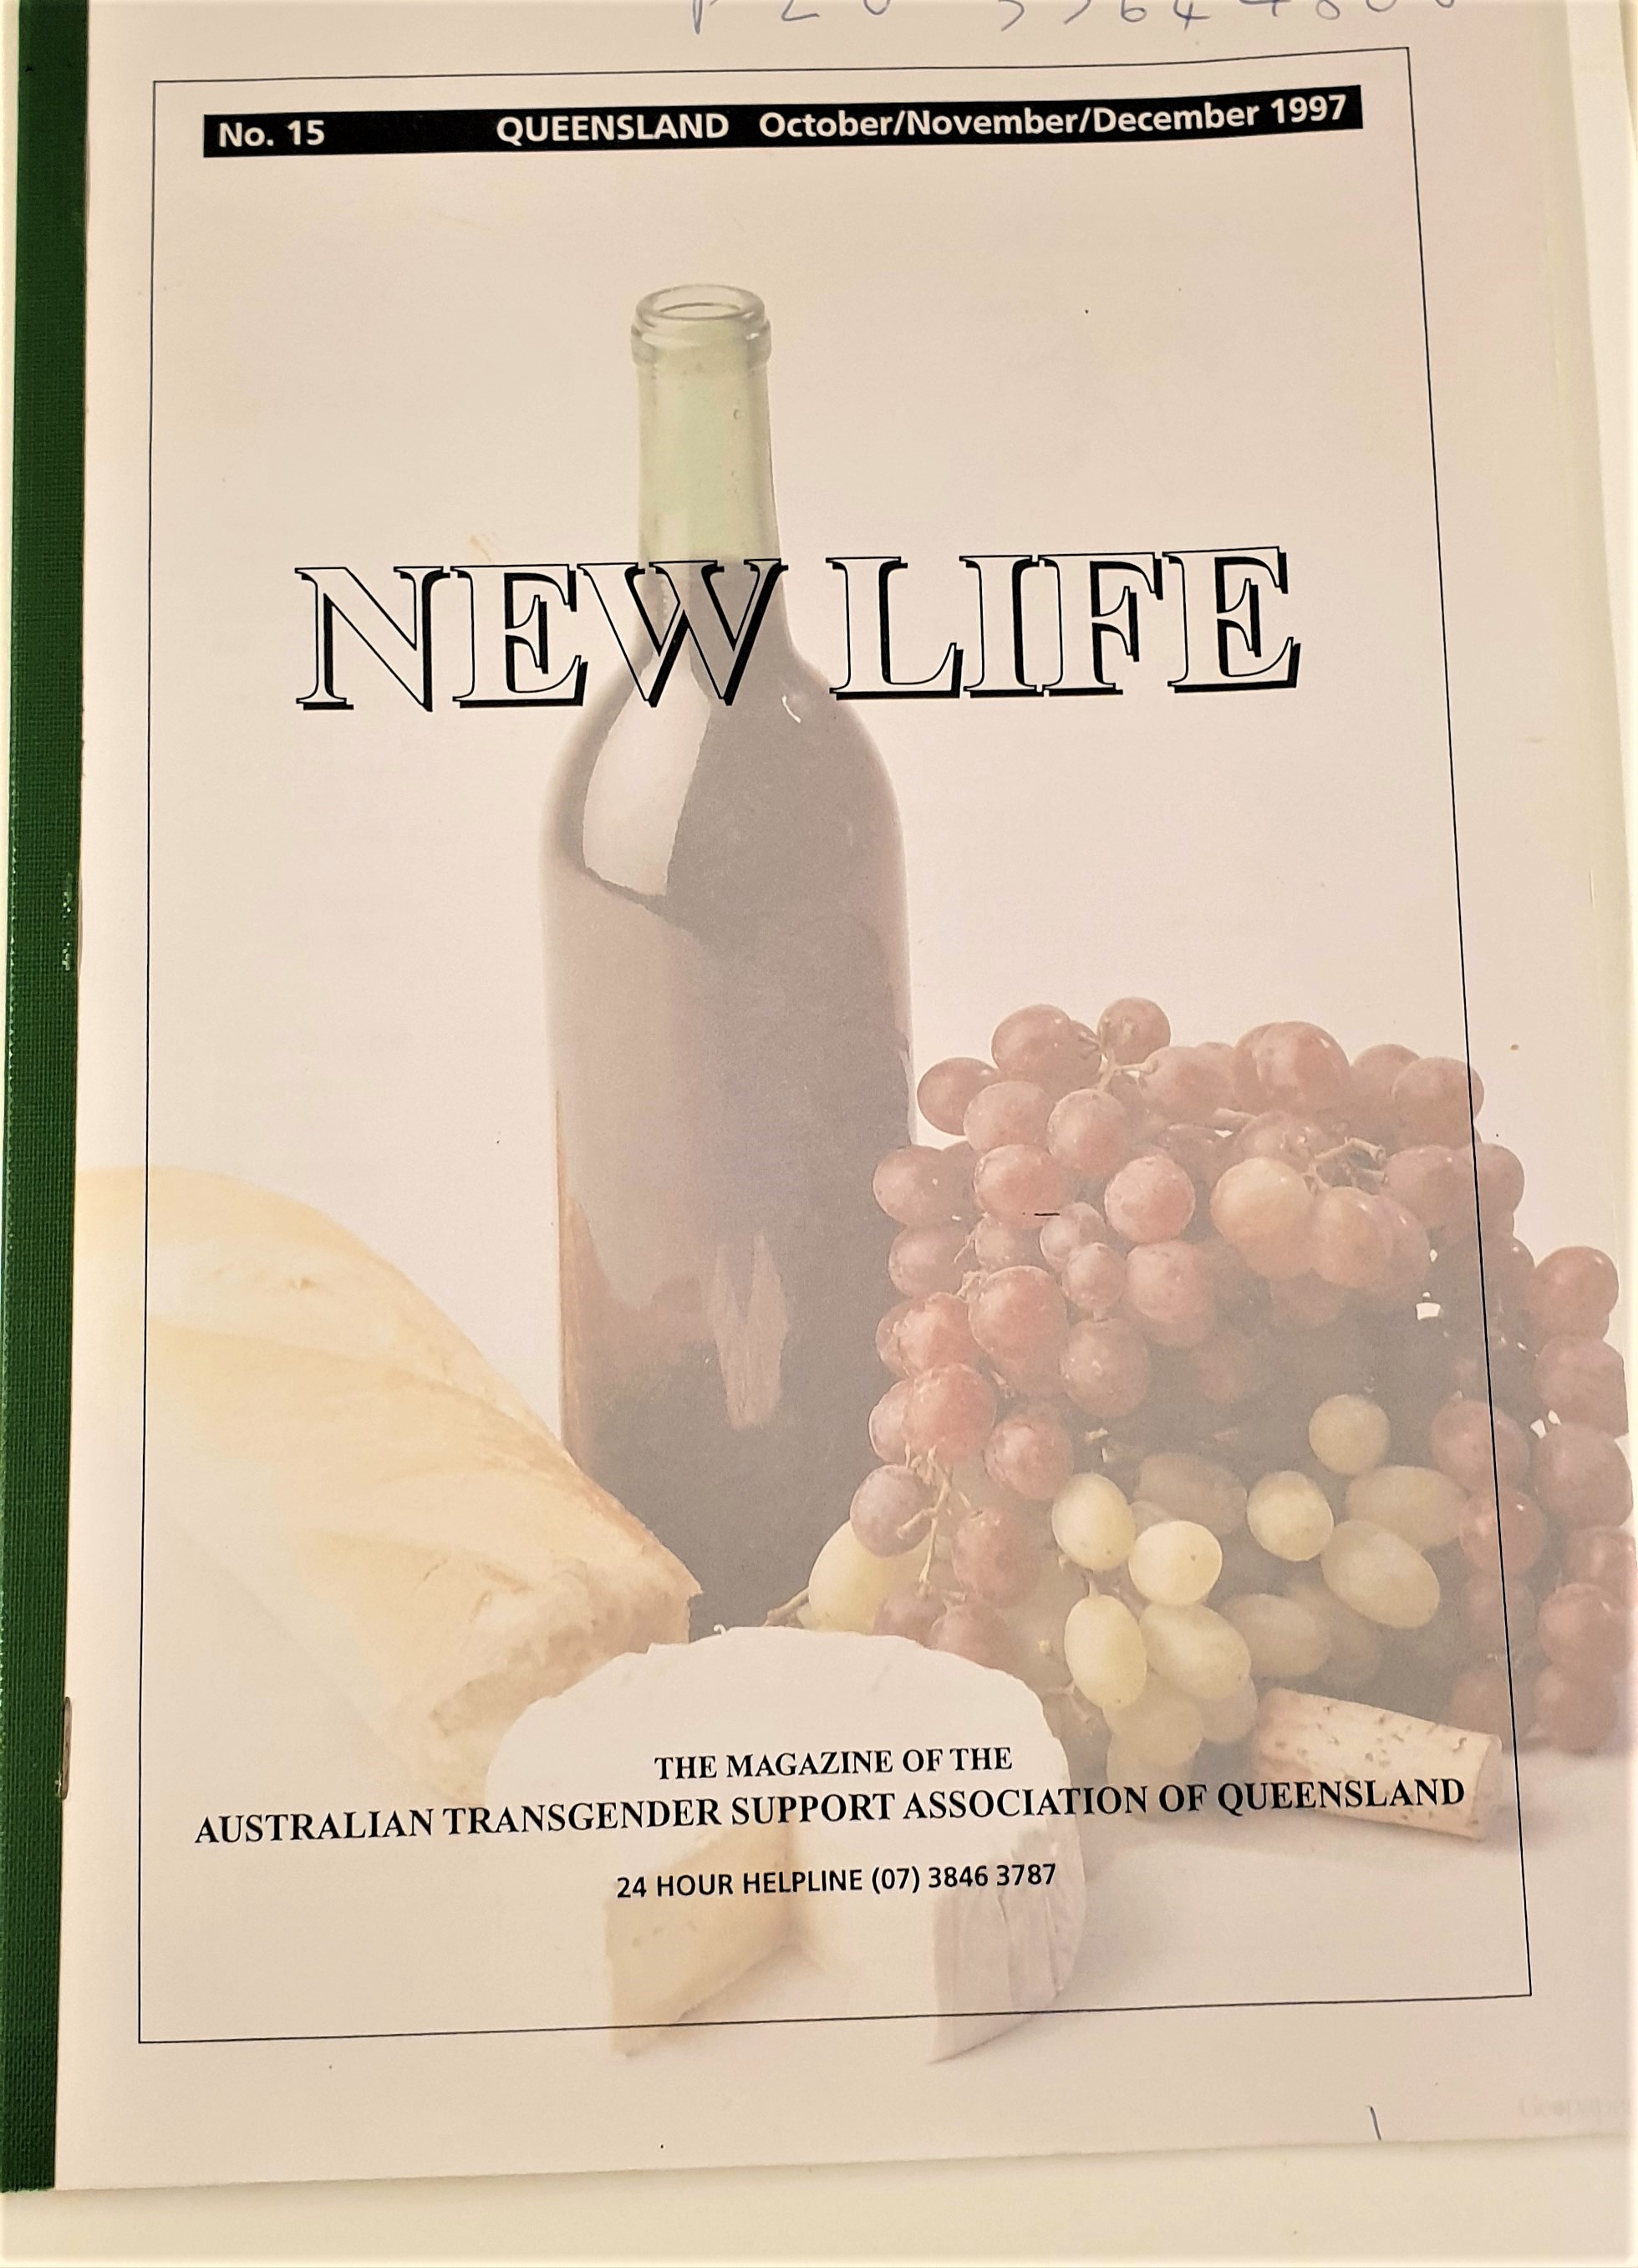 Cover of New Life (Oct./Nov./Dec. 1997), ATSAQ (Australian Transgender Support Association of Queensland) magazine